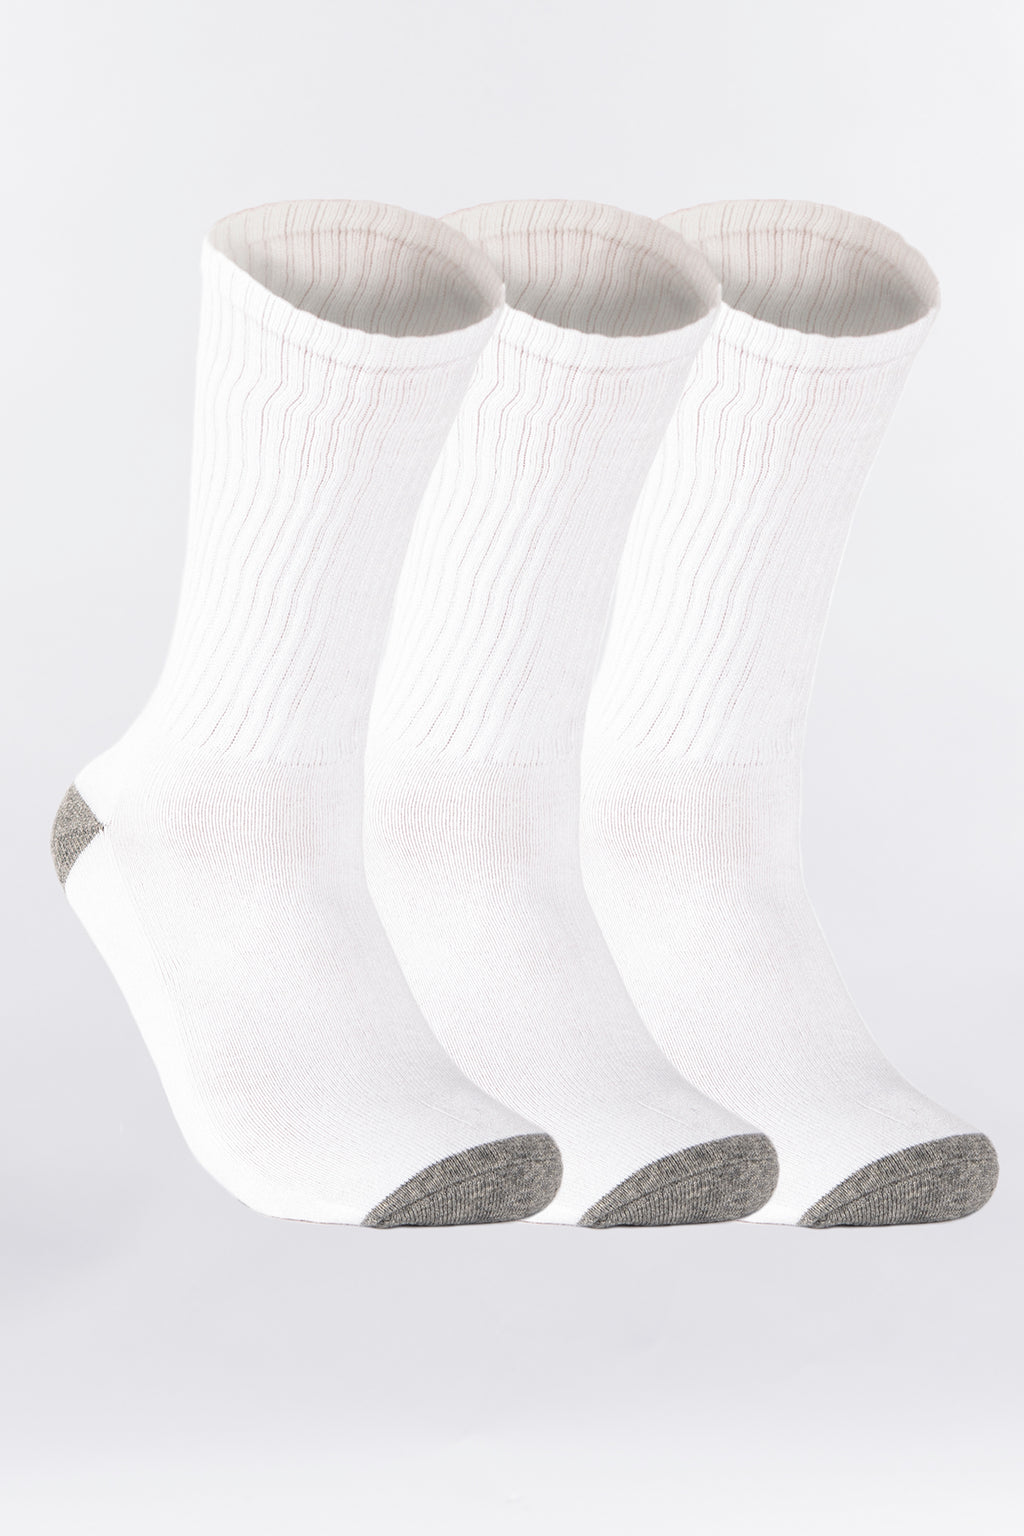 Men's Athletic Crew Socks